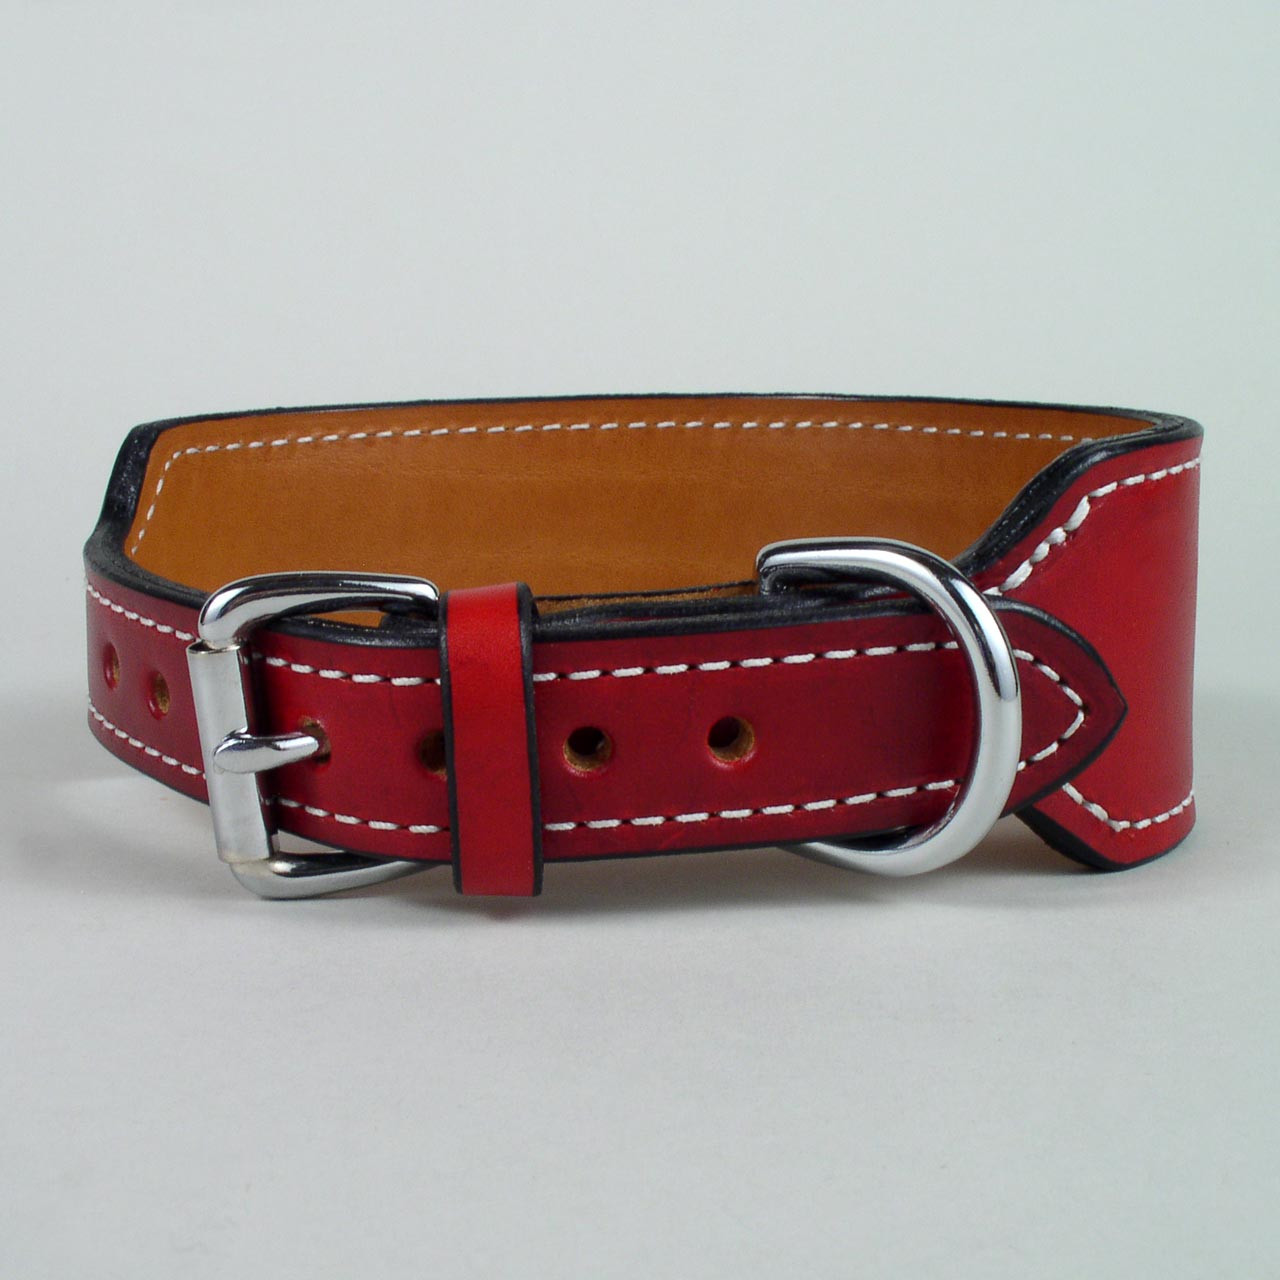 Imprinted Tough Dog Collar 1 1/2 Wide - Leathersmith Designs Inc.